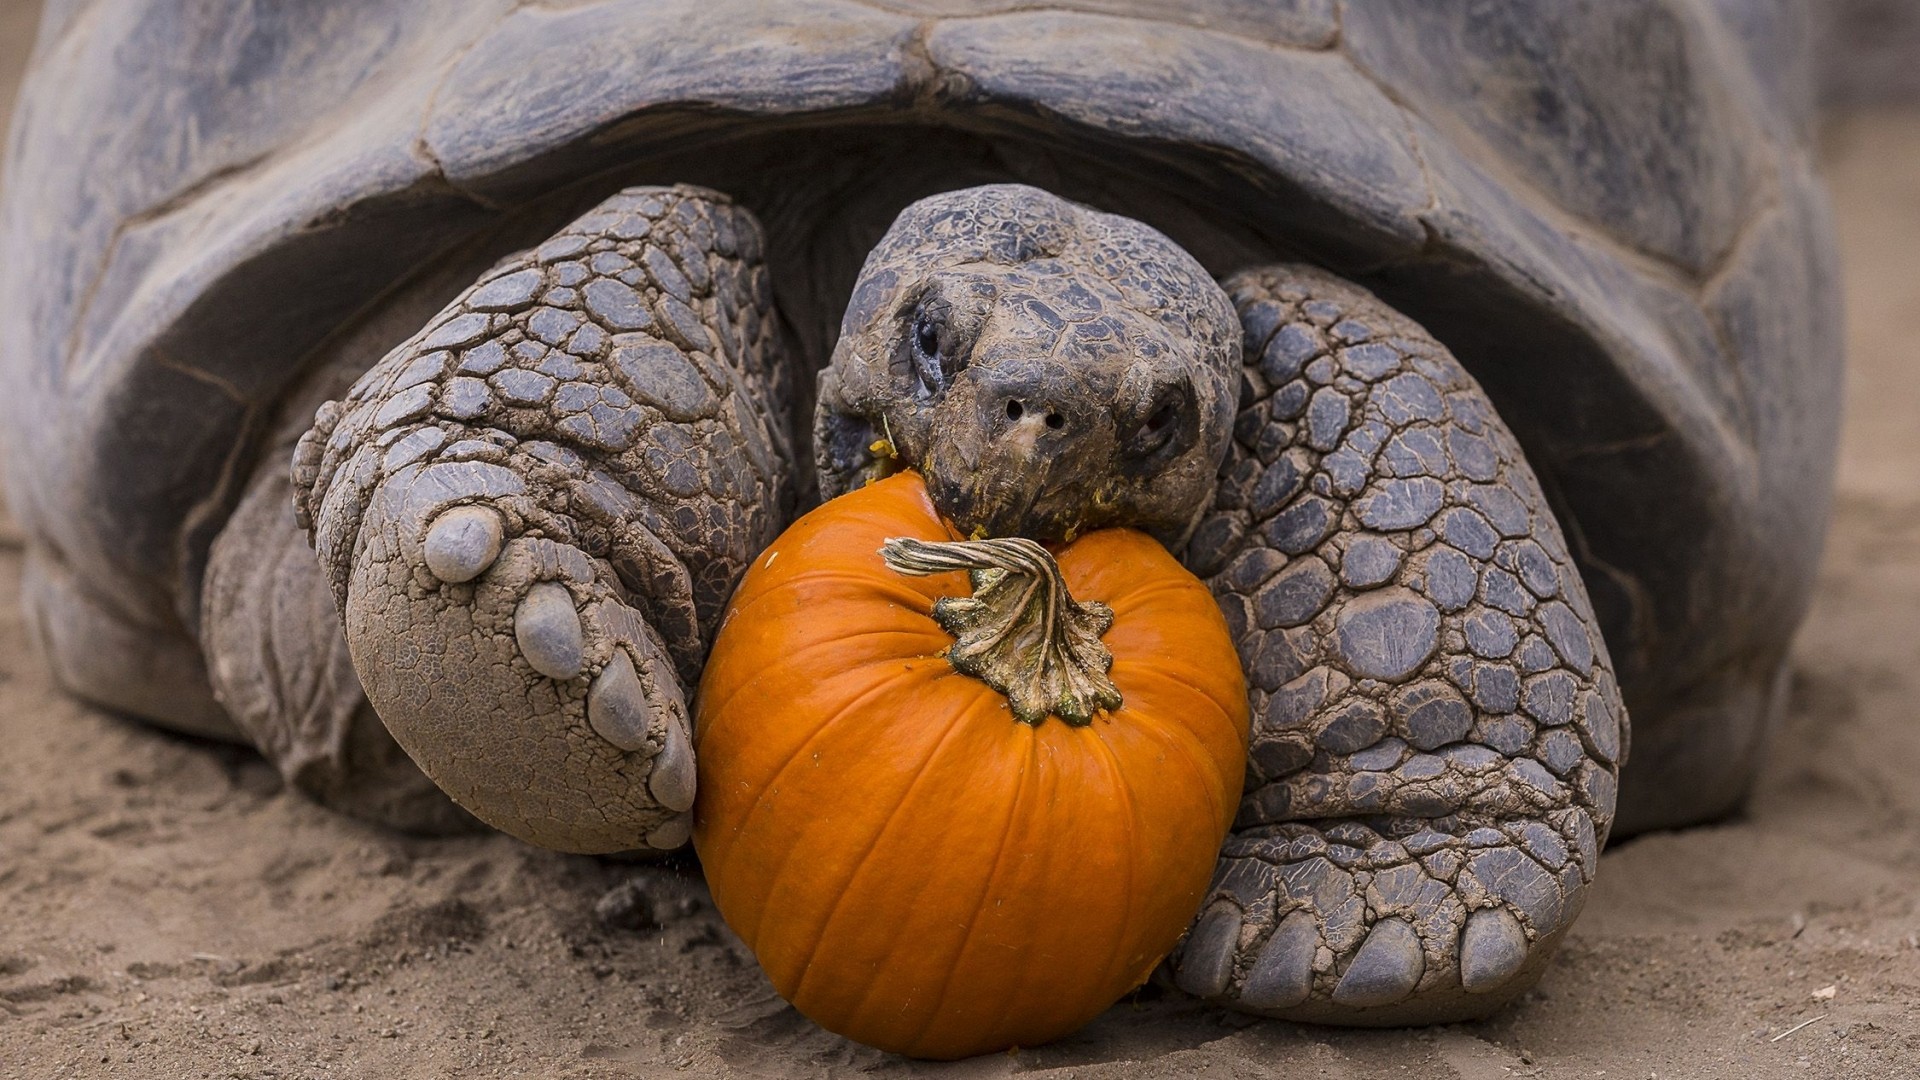 General 1920x1080 nature animals turtle eating pumpkin sand closeup depth of field tortoises